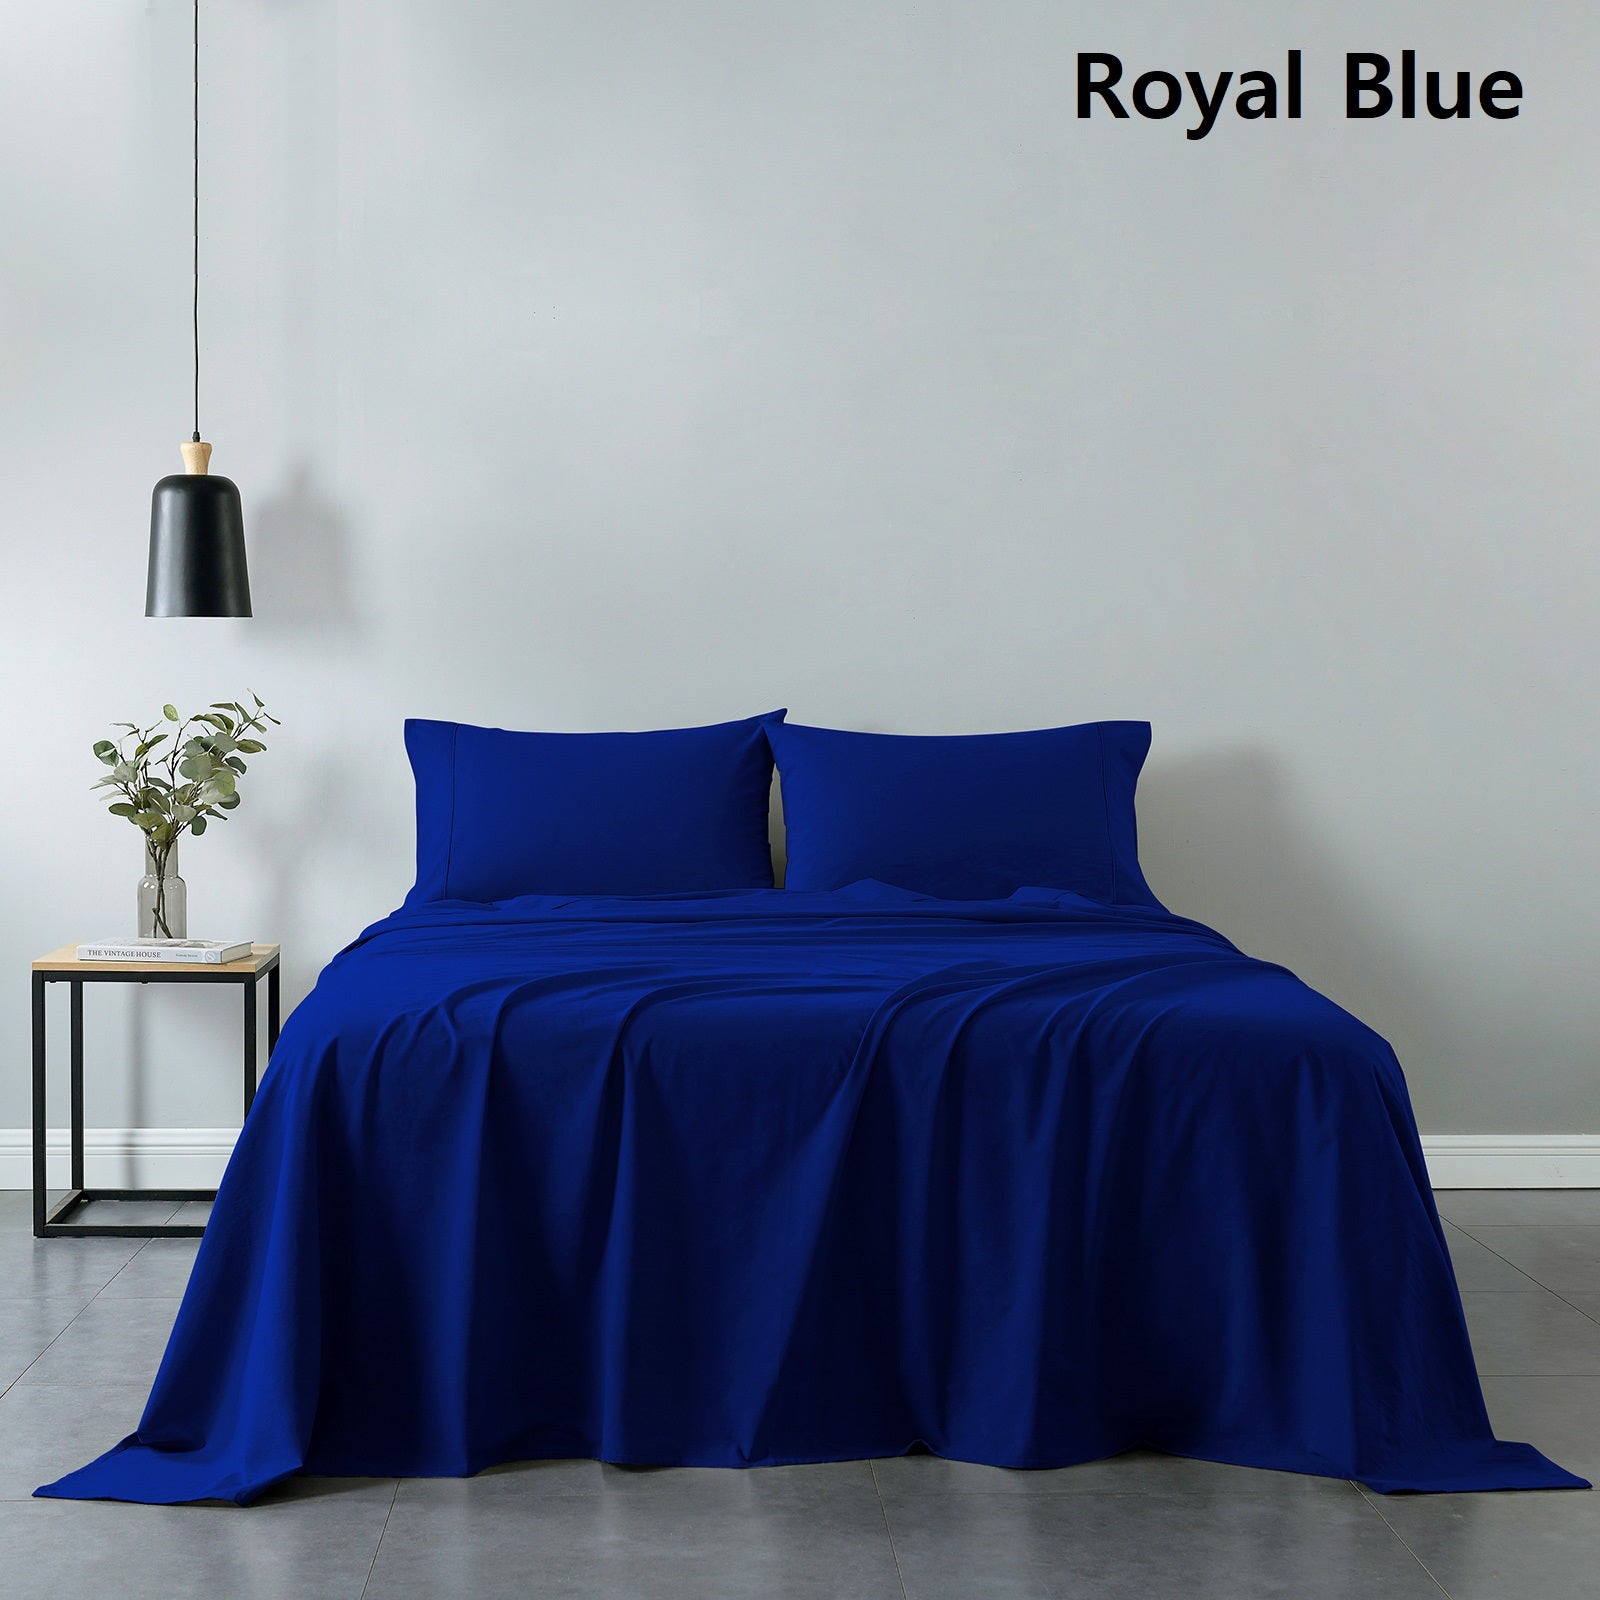 Royal Comfort Vintage Washed 100% Cotton Sheet Set Fitted Flat Sheet Pillowcases King Royal Blue Deals499